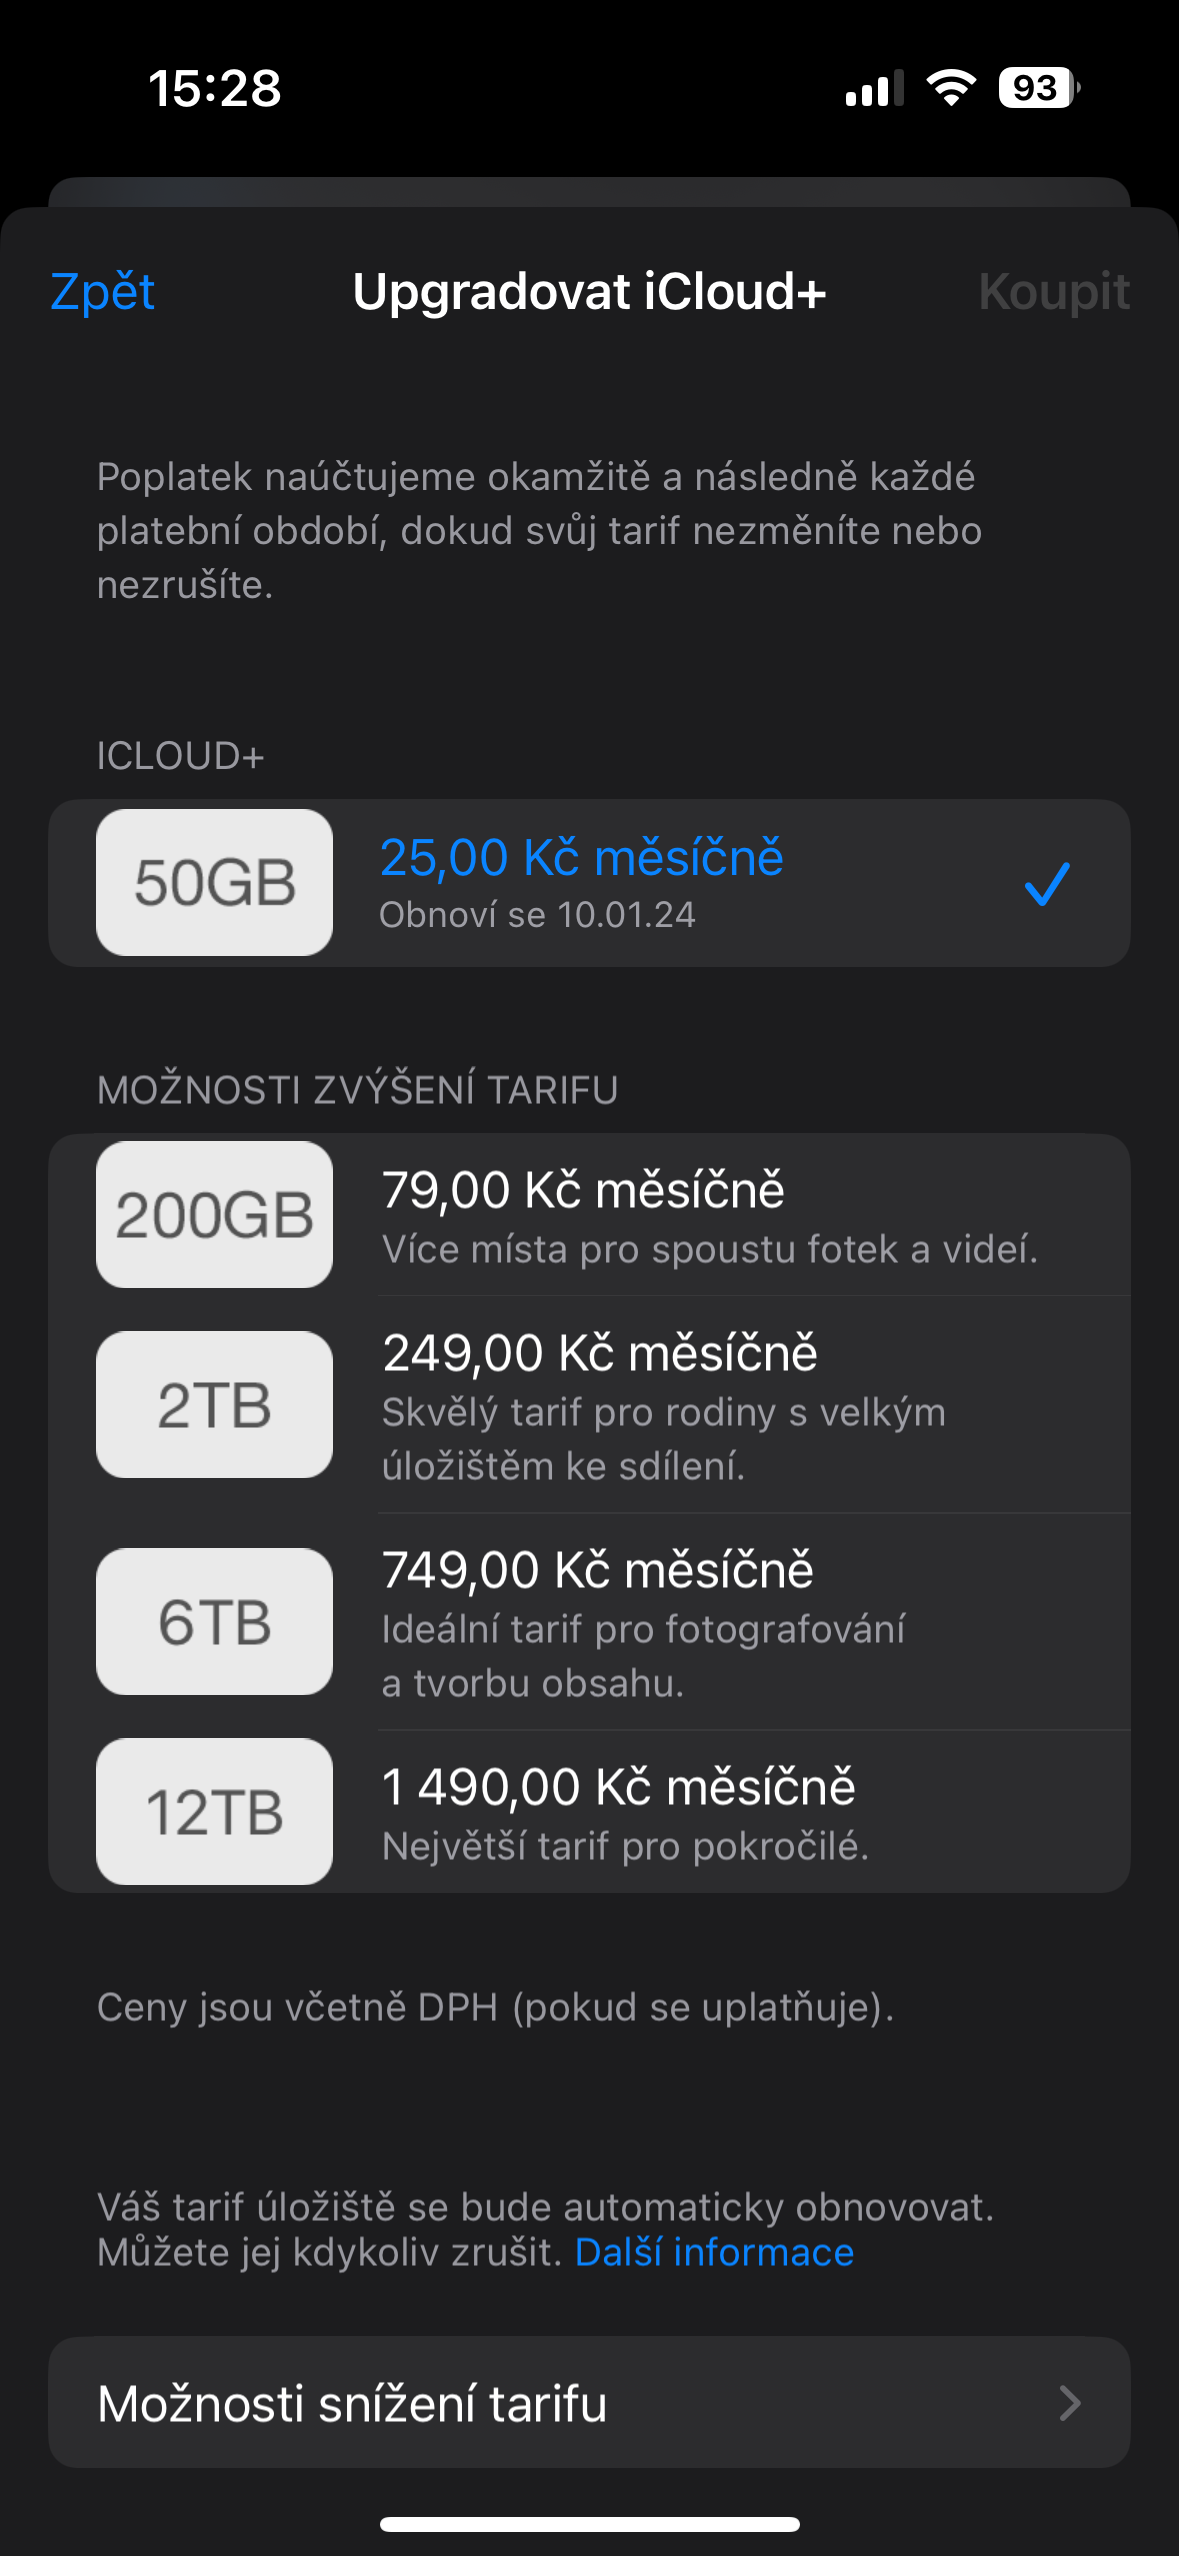 iCloud mobilenet.cz radí